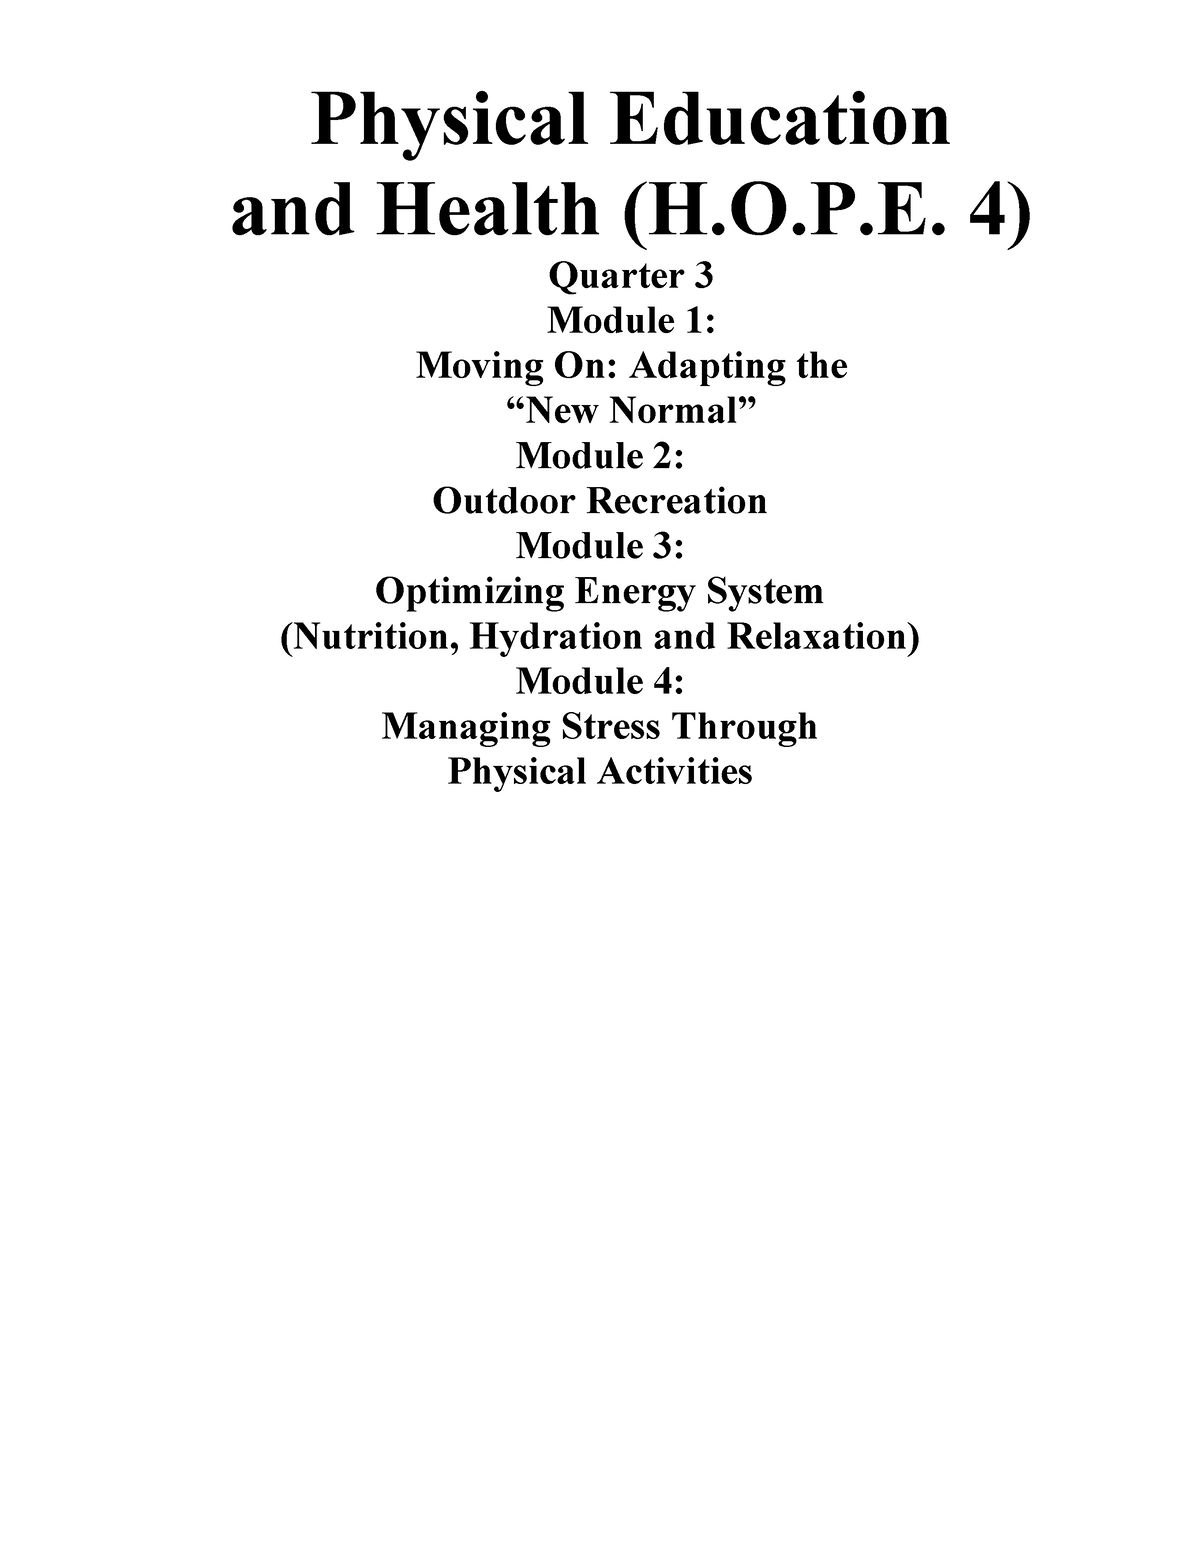 12 Hope 4 Module 3rd Quarter Physical Education And Health Hop 4 Quarter 3 Module 1 2982